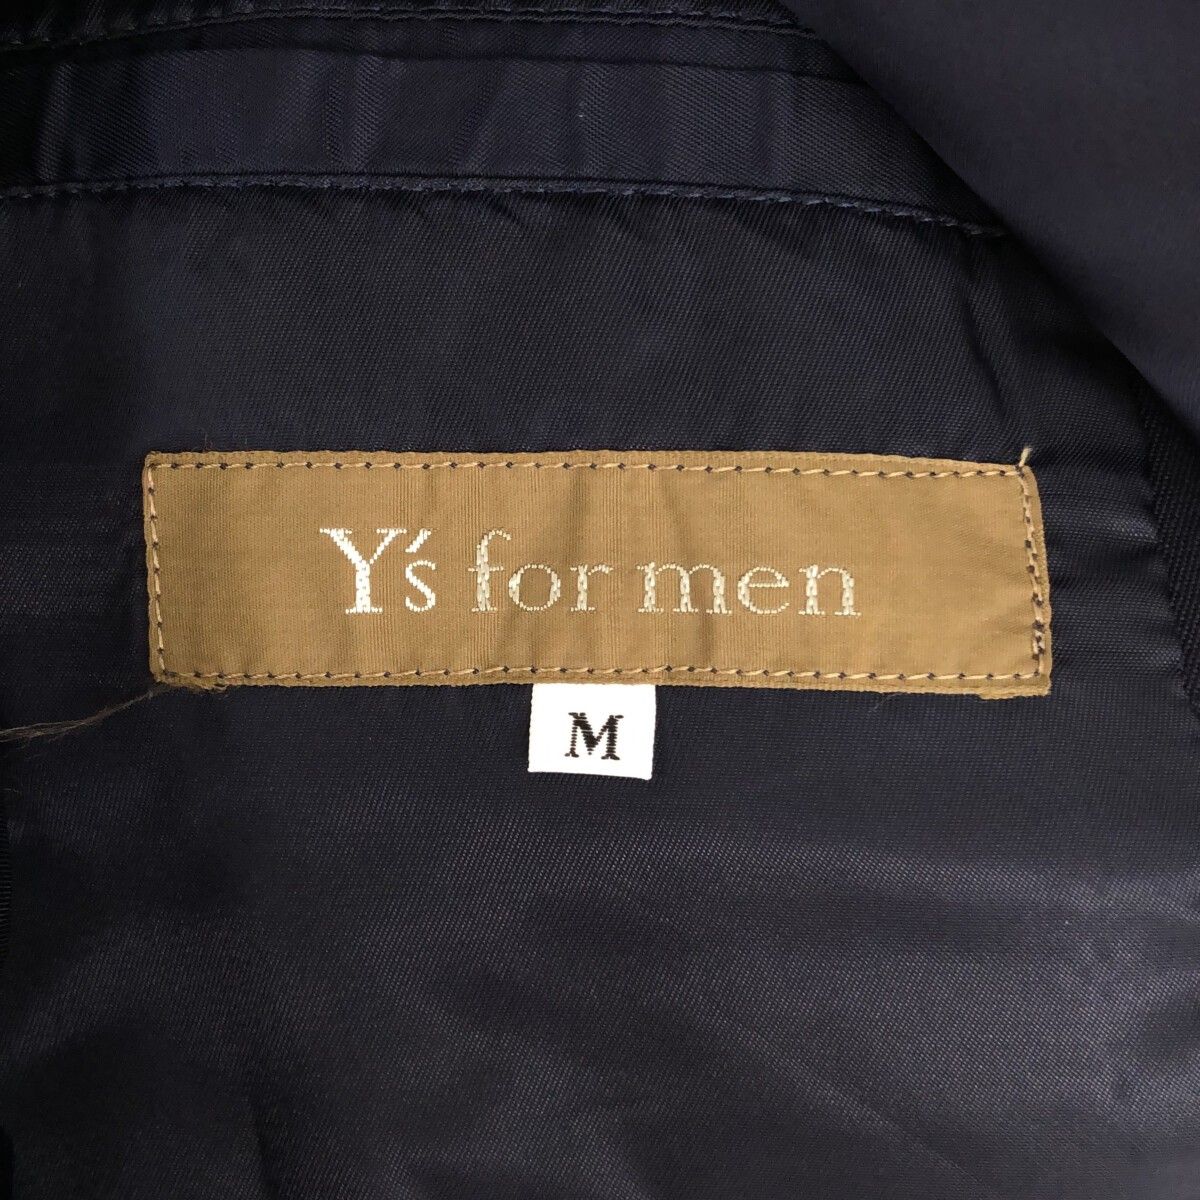 Y's for men ワイズ フォーメン 1990's ウールミリタリージャケット ネイビー M MH-J06-136